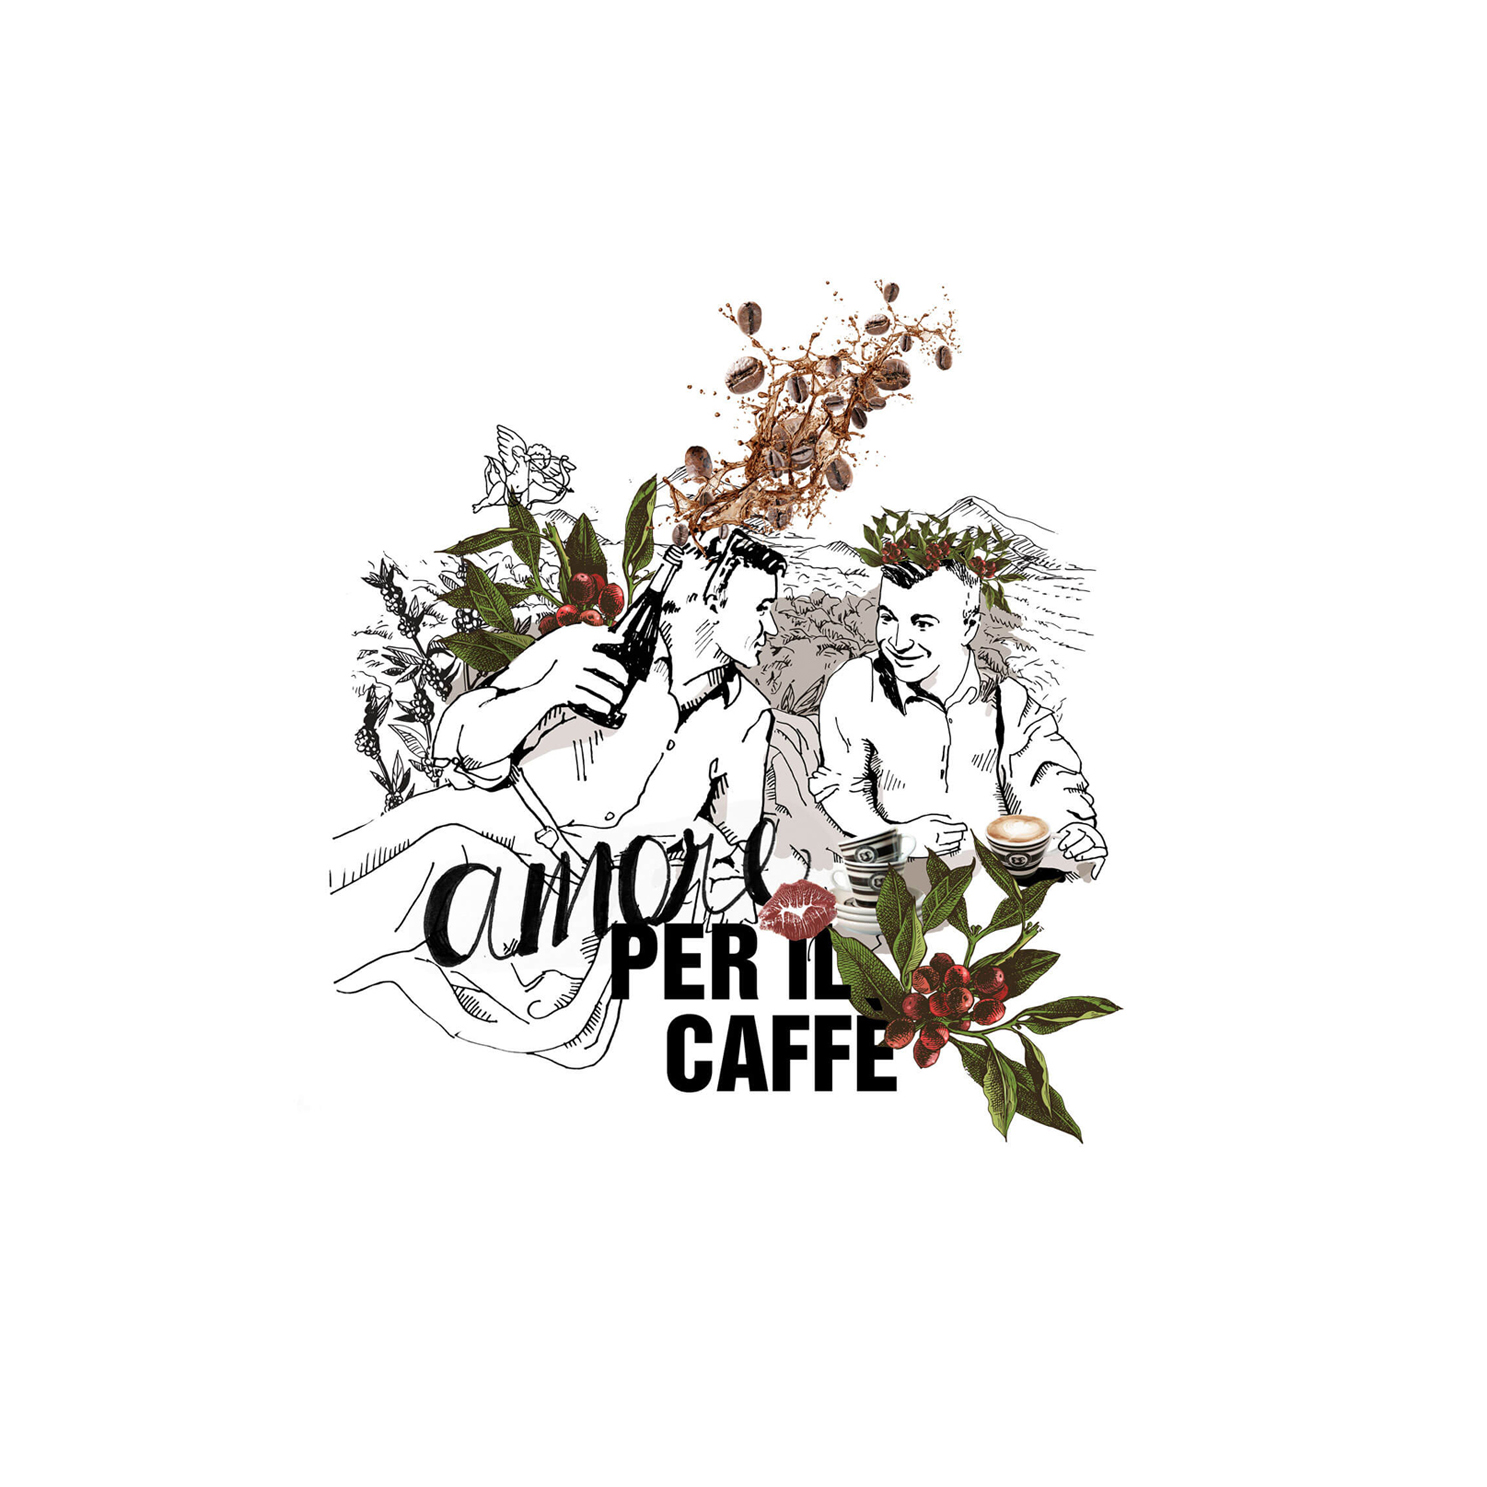 Illustrationen, Caffè Gemelli, Josef und Bernd Kirisits, Collage, Kaffe, Leidenschaft, Liebe, Amore, italienischer Kaffee, Kaffeebohnen